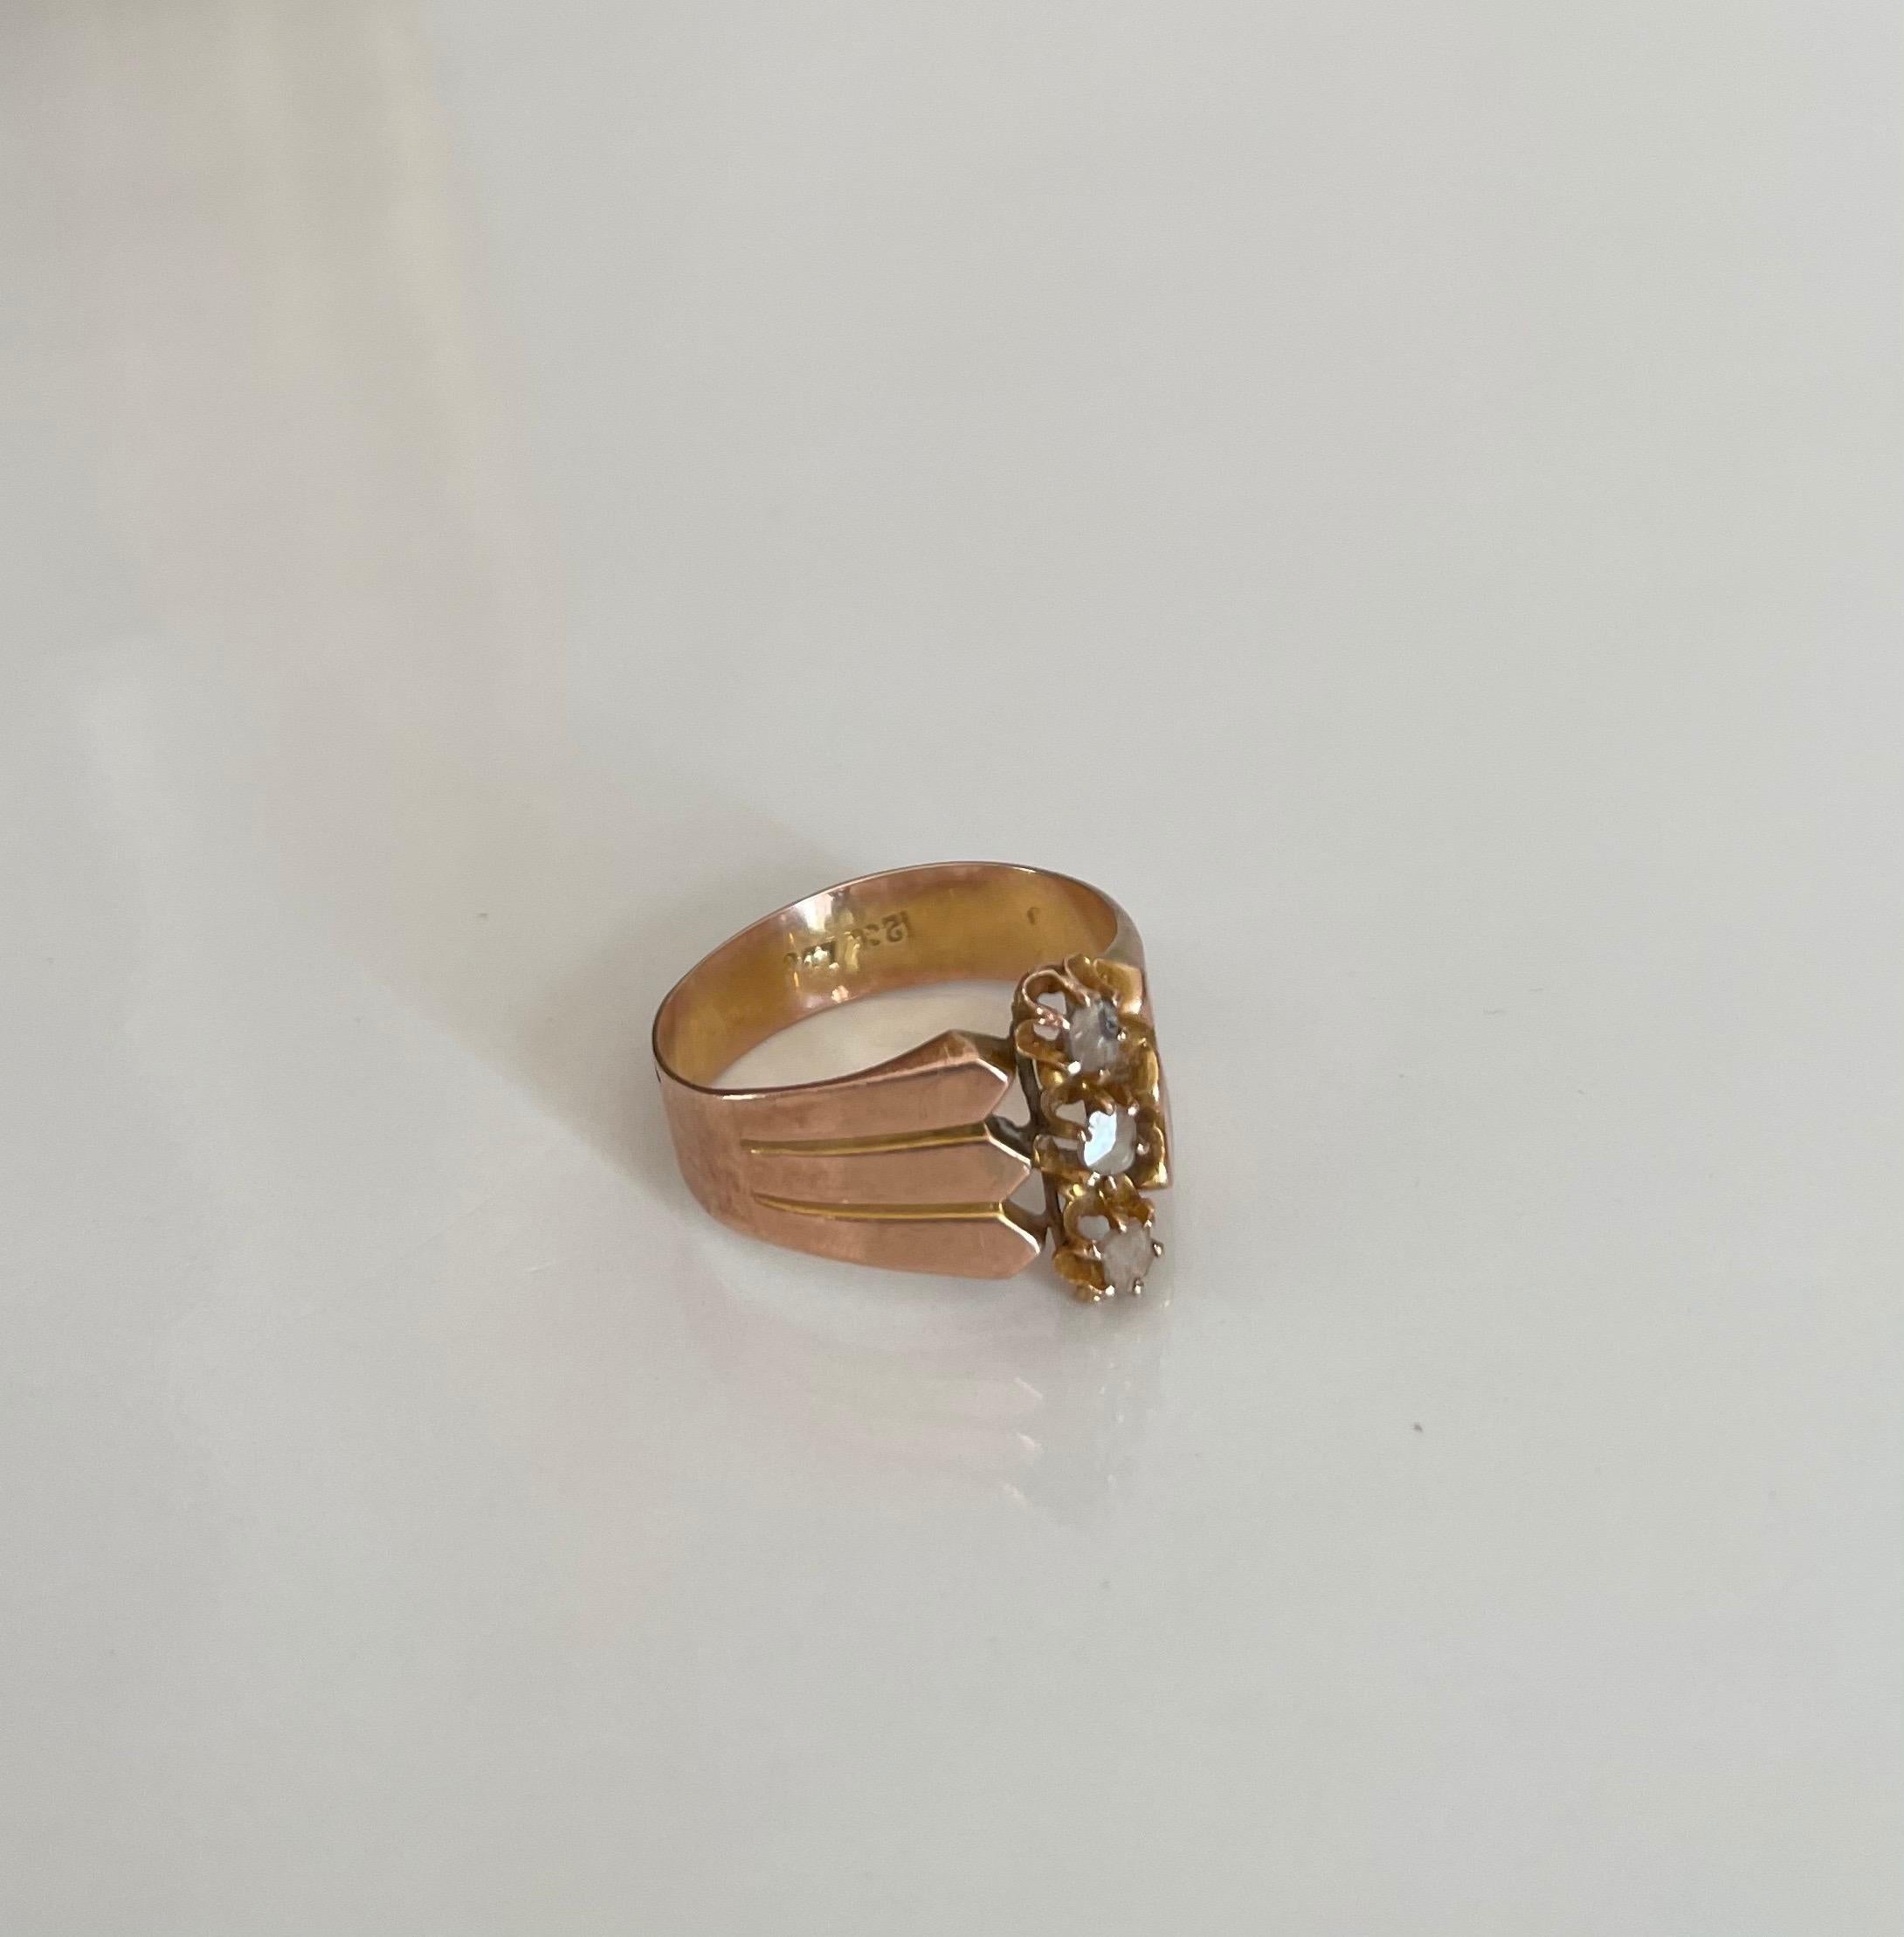 Early 20th Century Italian 9kt Gold Art Deco Ring